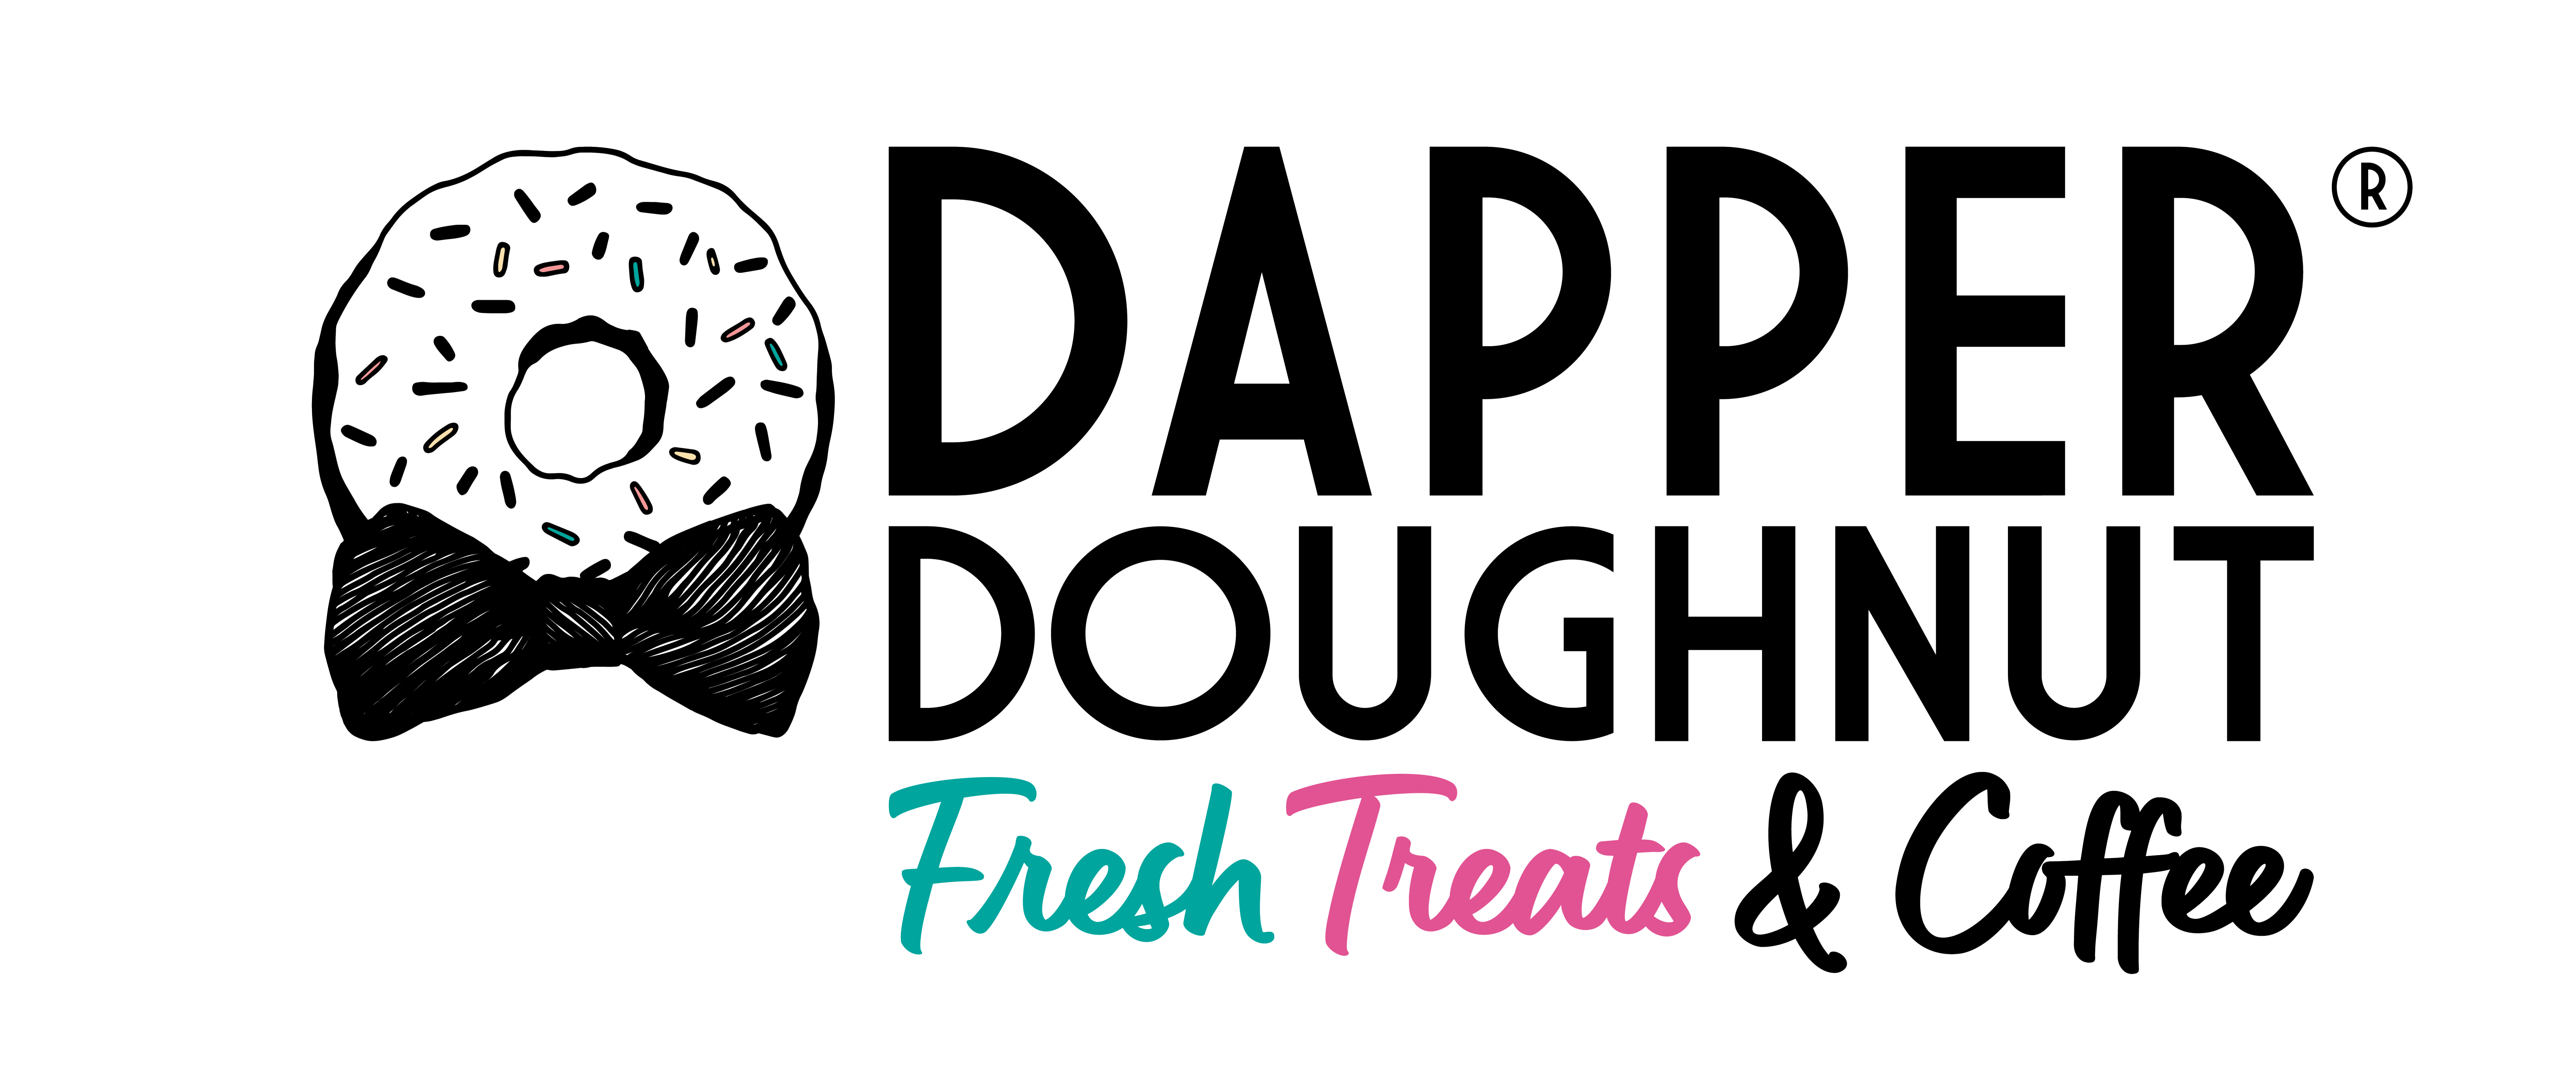 Dapper Doughnut Fresh Treats & Coffee logo